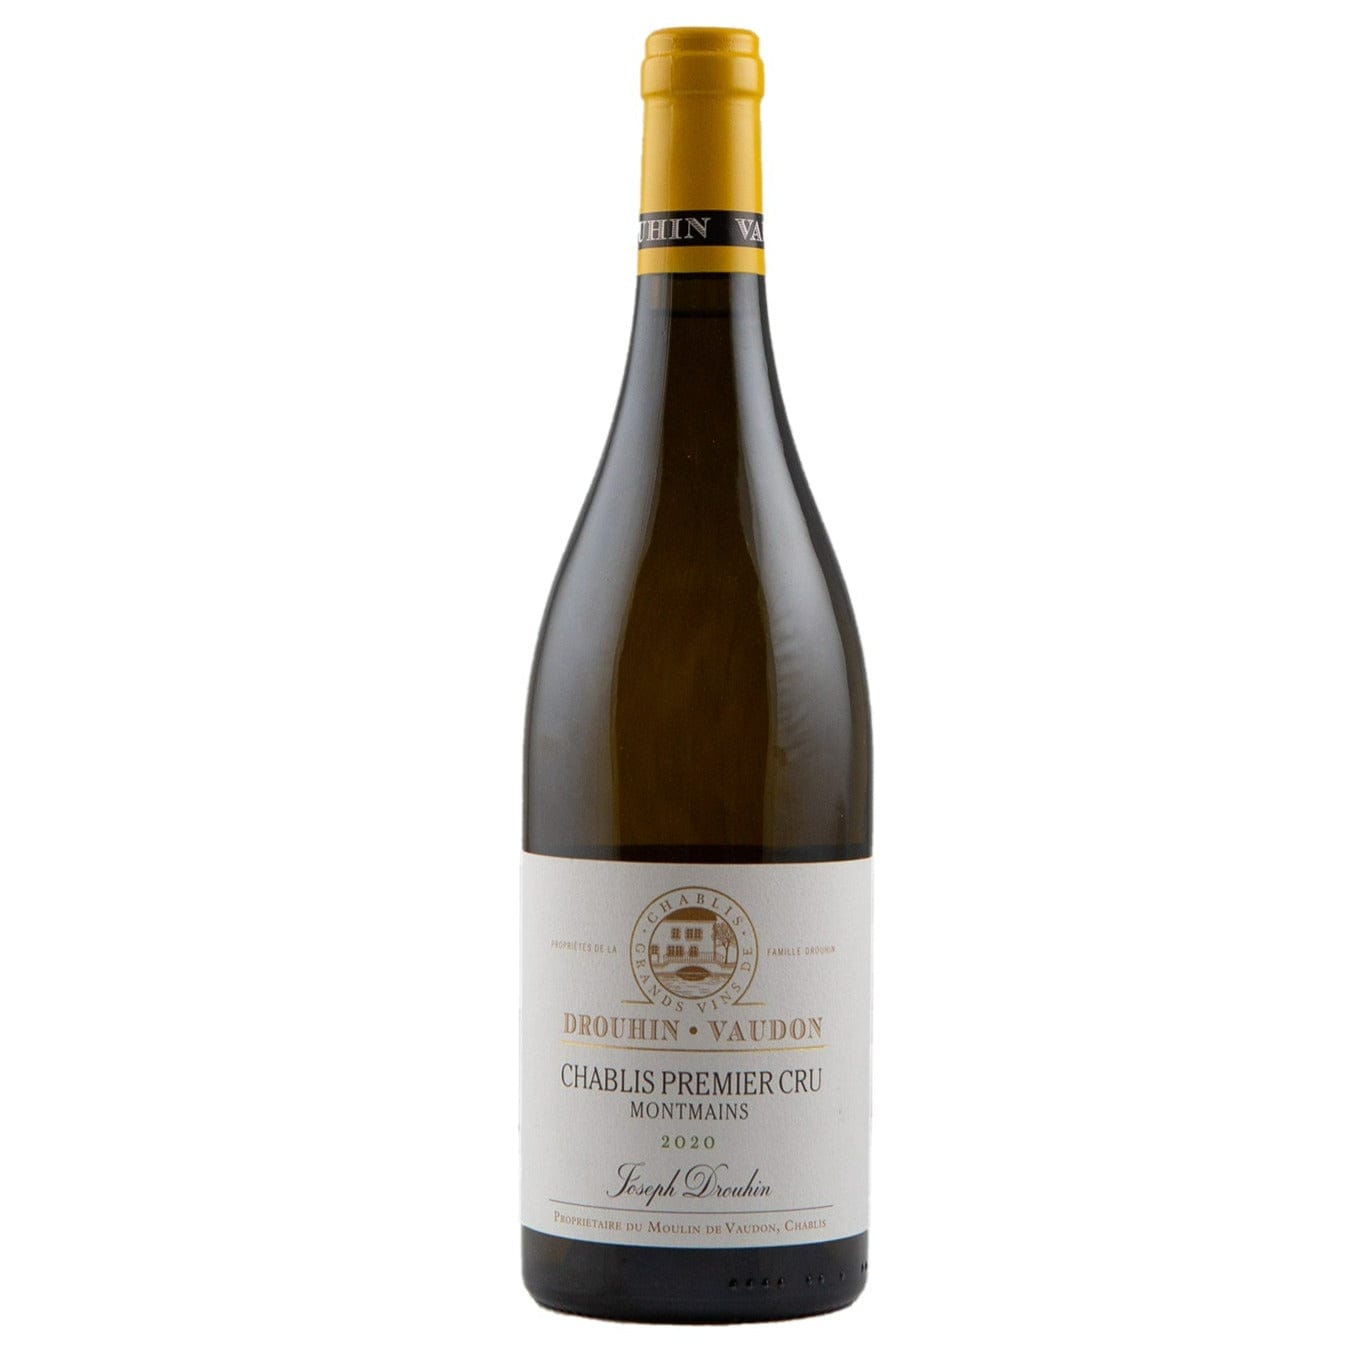 Single bottle of White wine Drouhin-Vaudon, Montmains Premier Cru, Chablis, 2020 100% Chardonnay